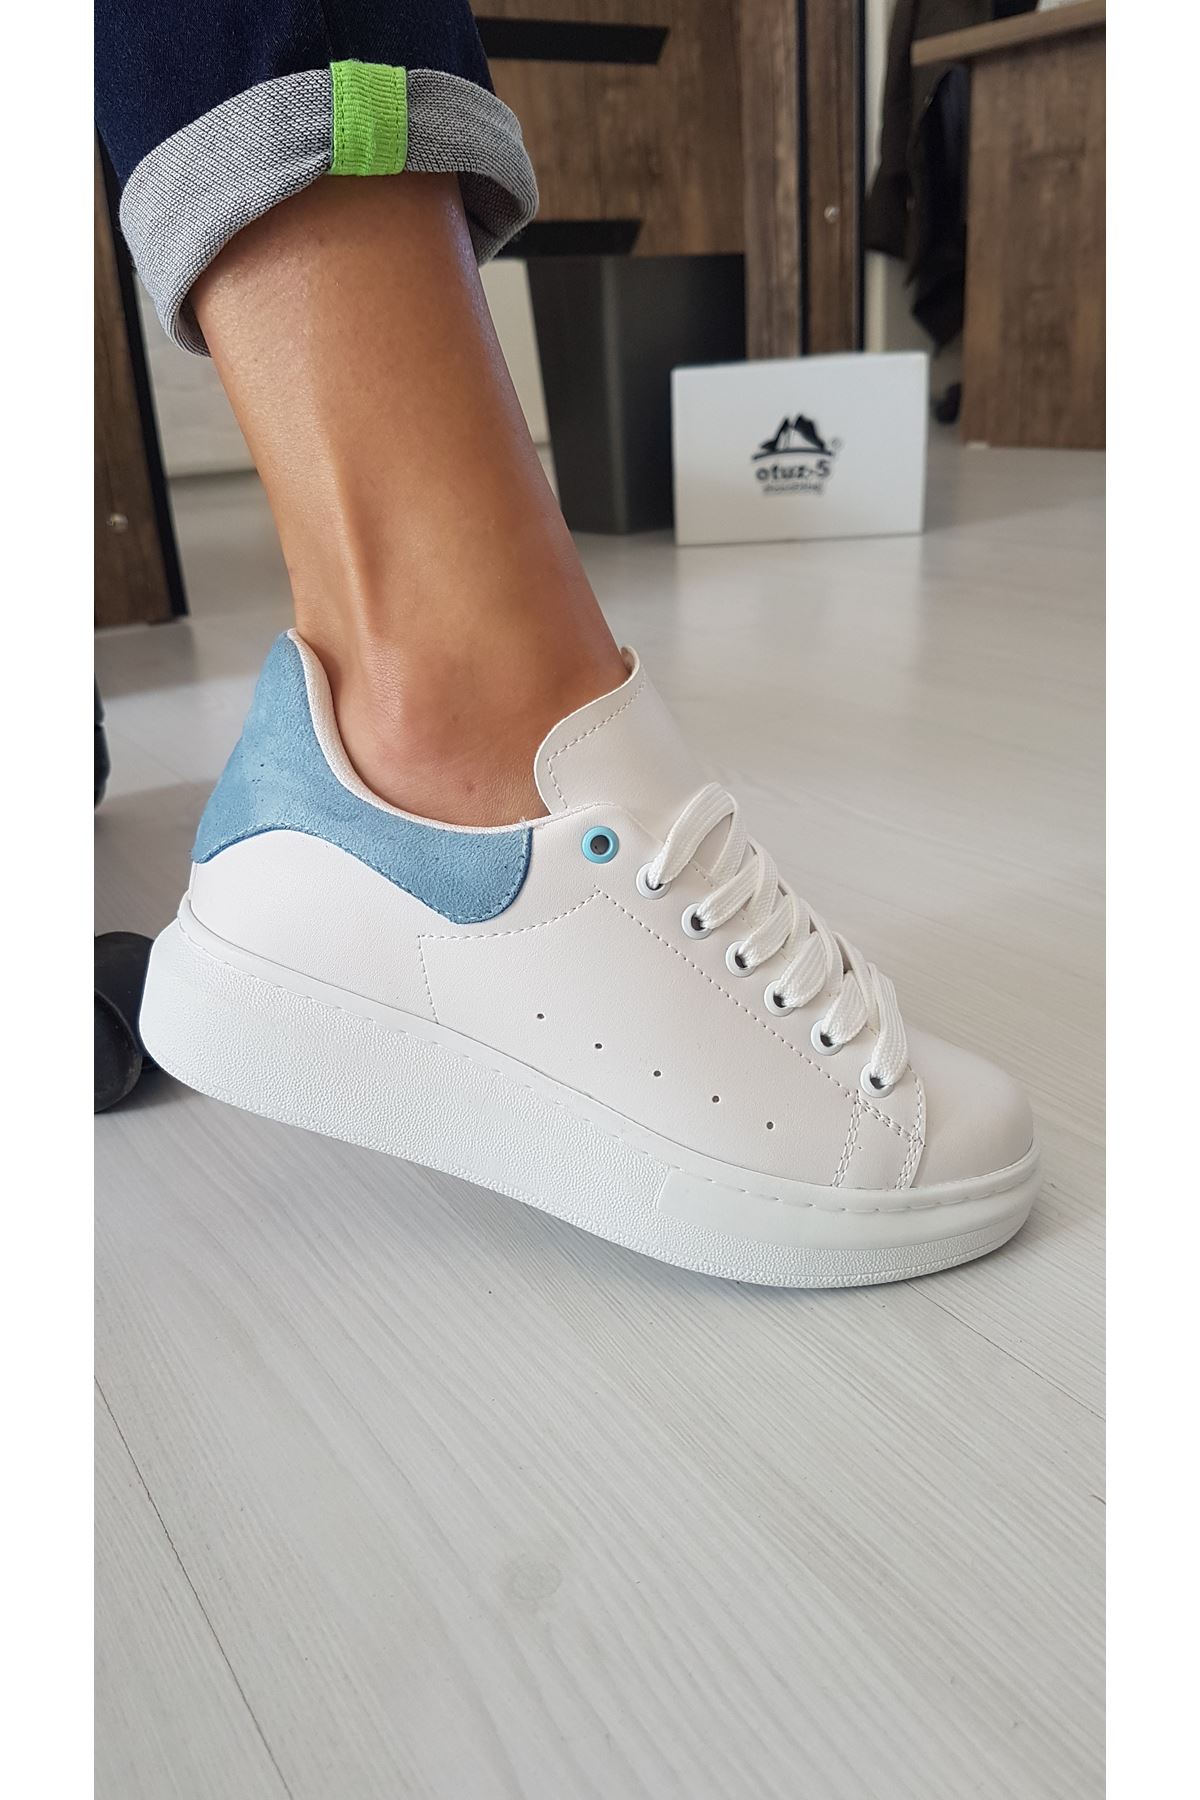 Lucy Mat Deri Bebek Mavi Süet Detay Sneakers Beyaz 